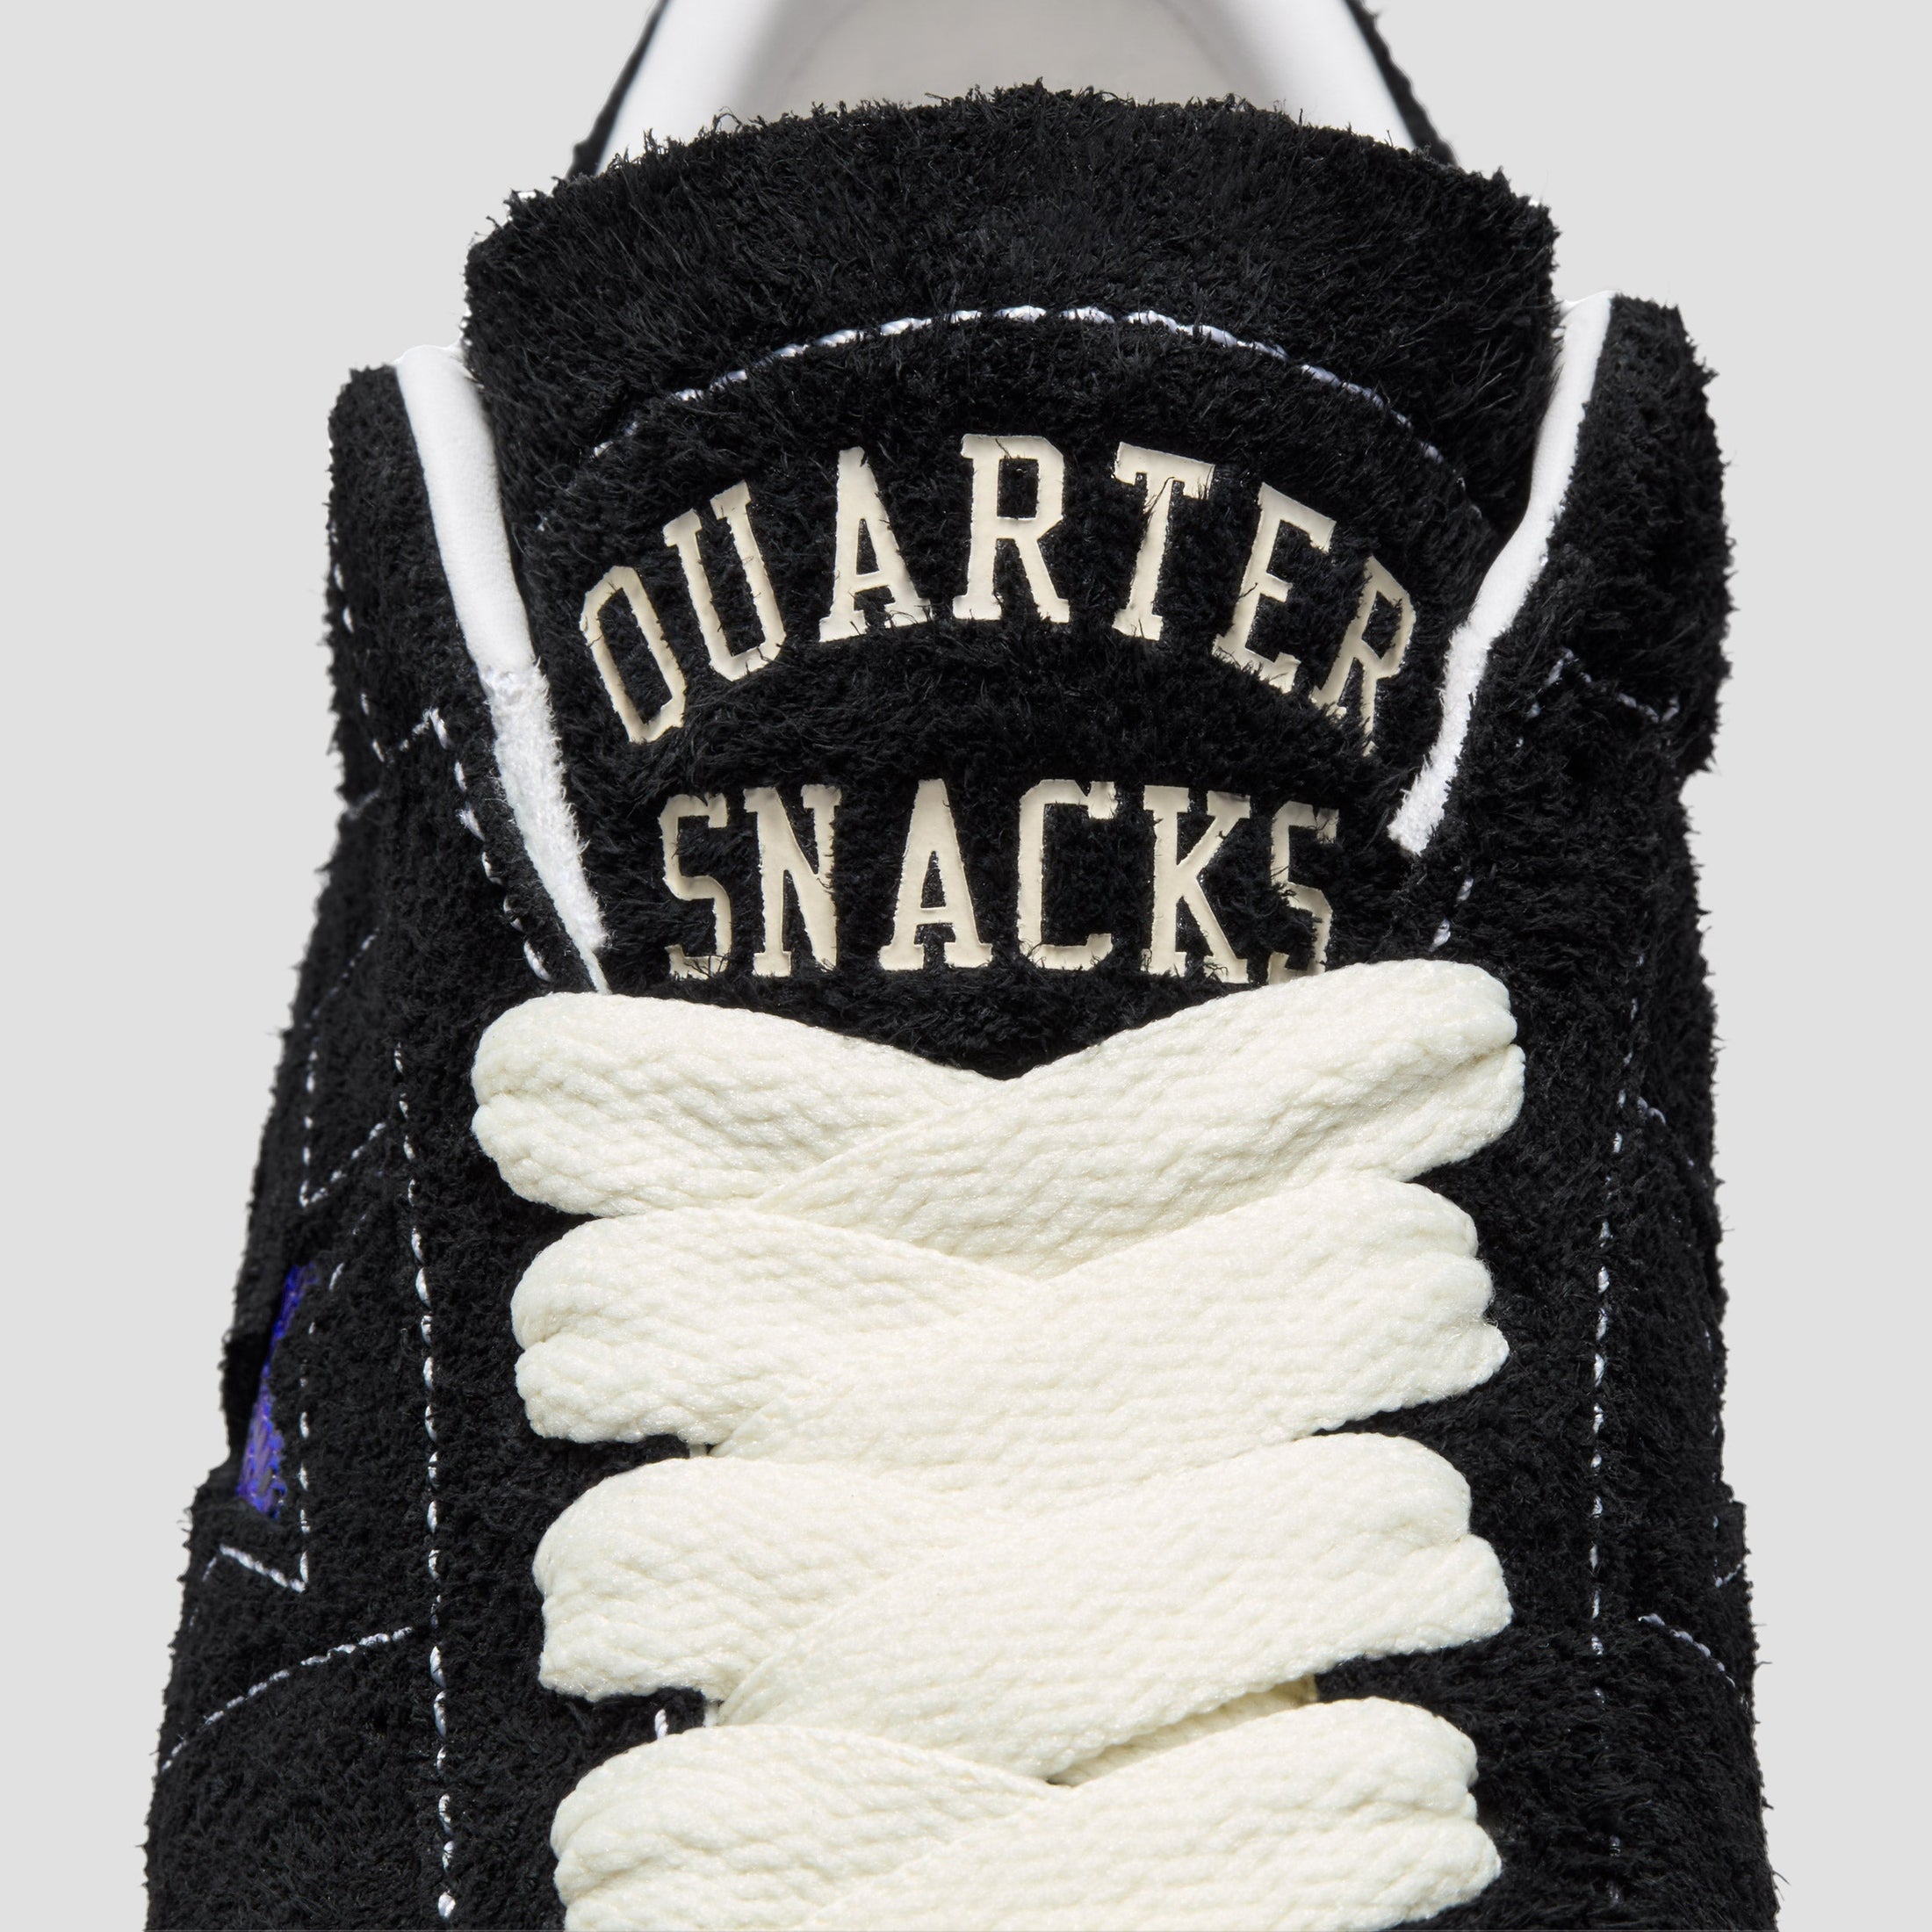 Converse Cons x Quartersnacks One Star Pro Ox Skate Shoes Black / Egret / Hyper Blue